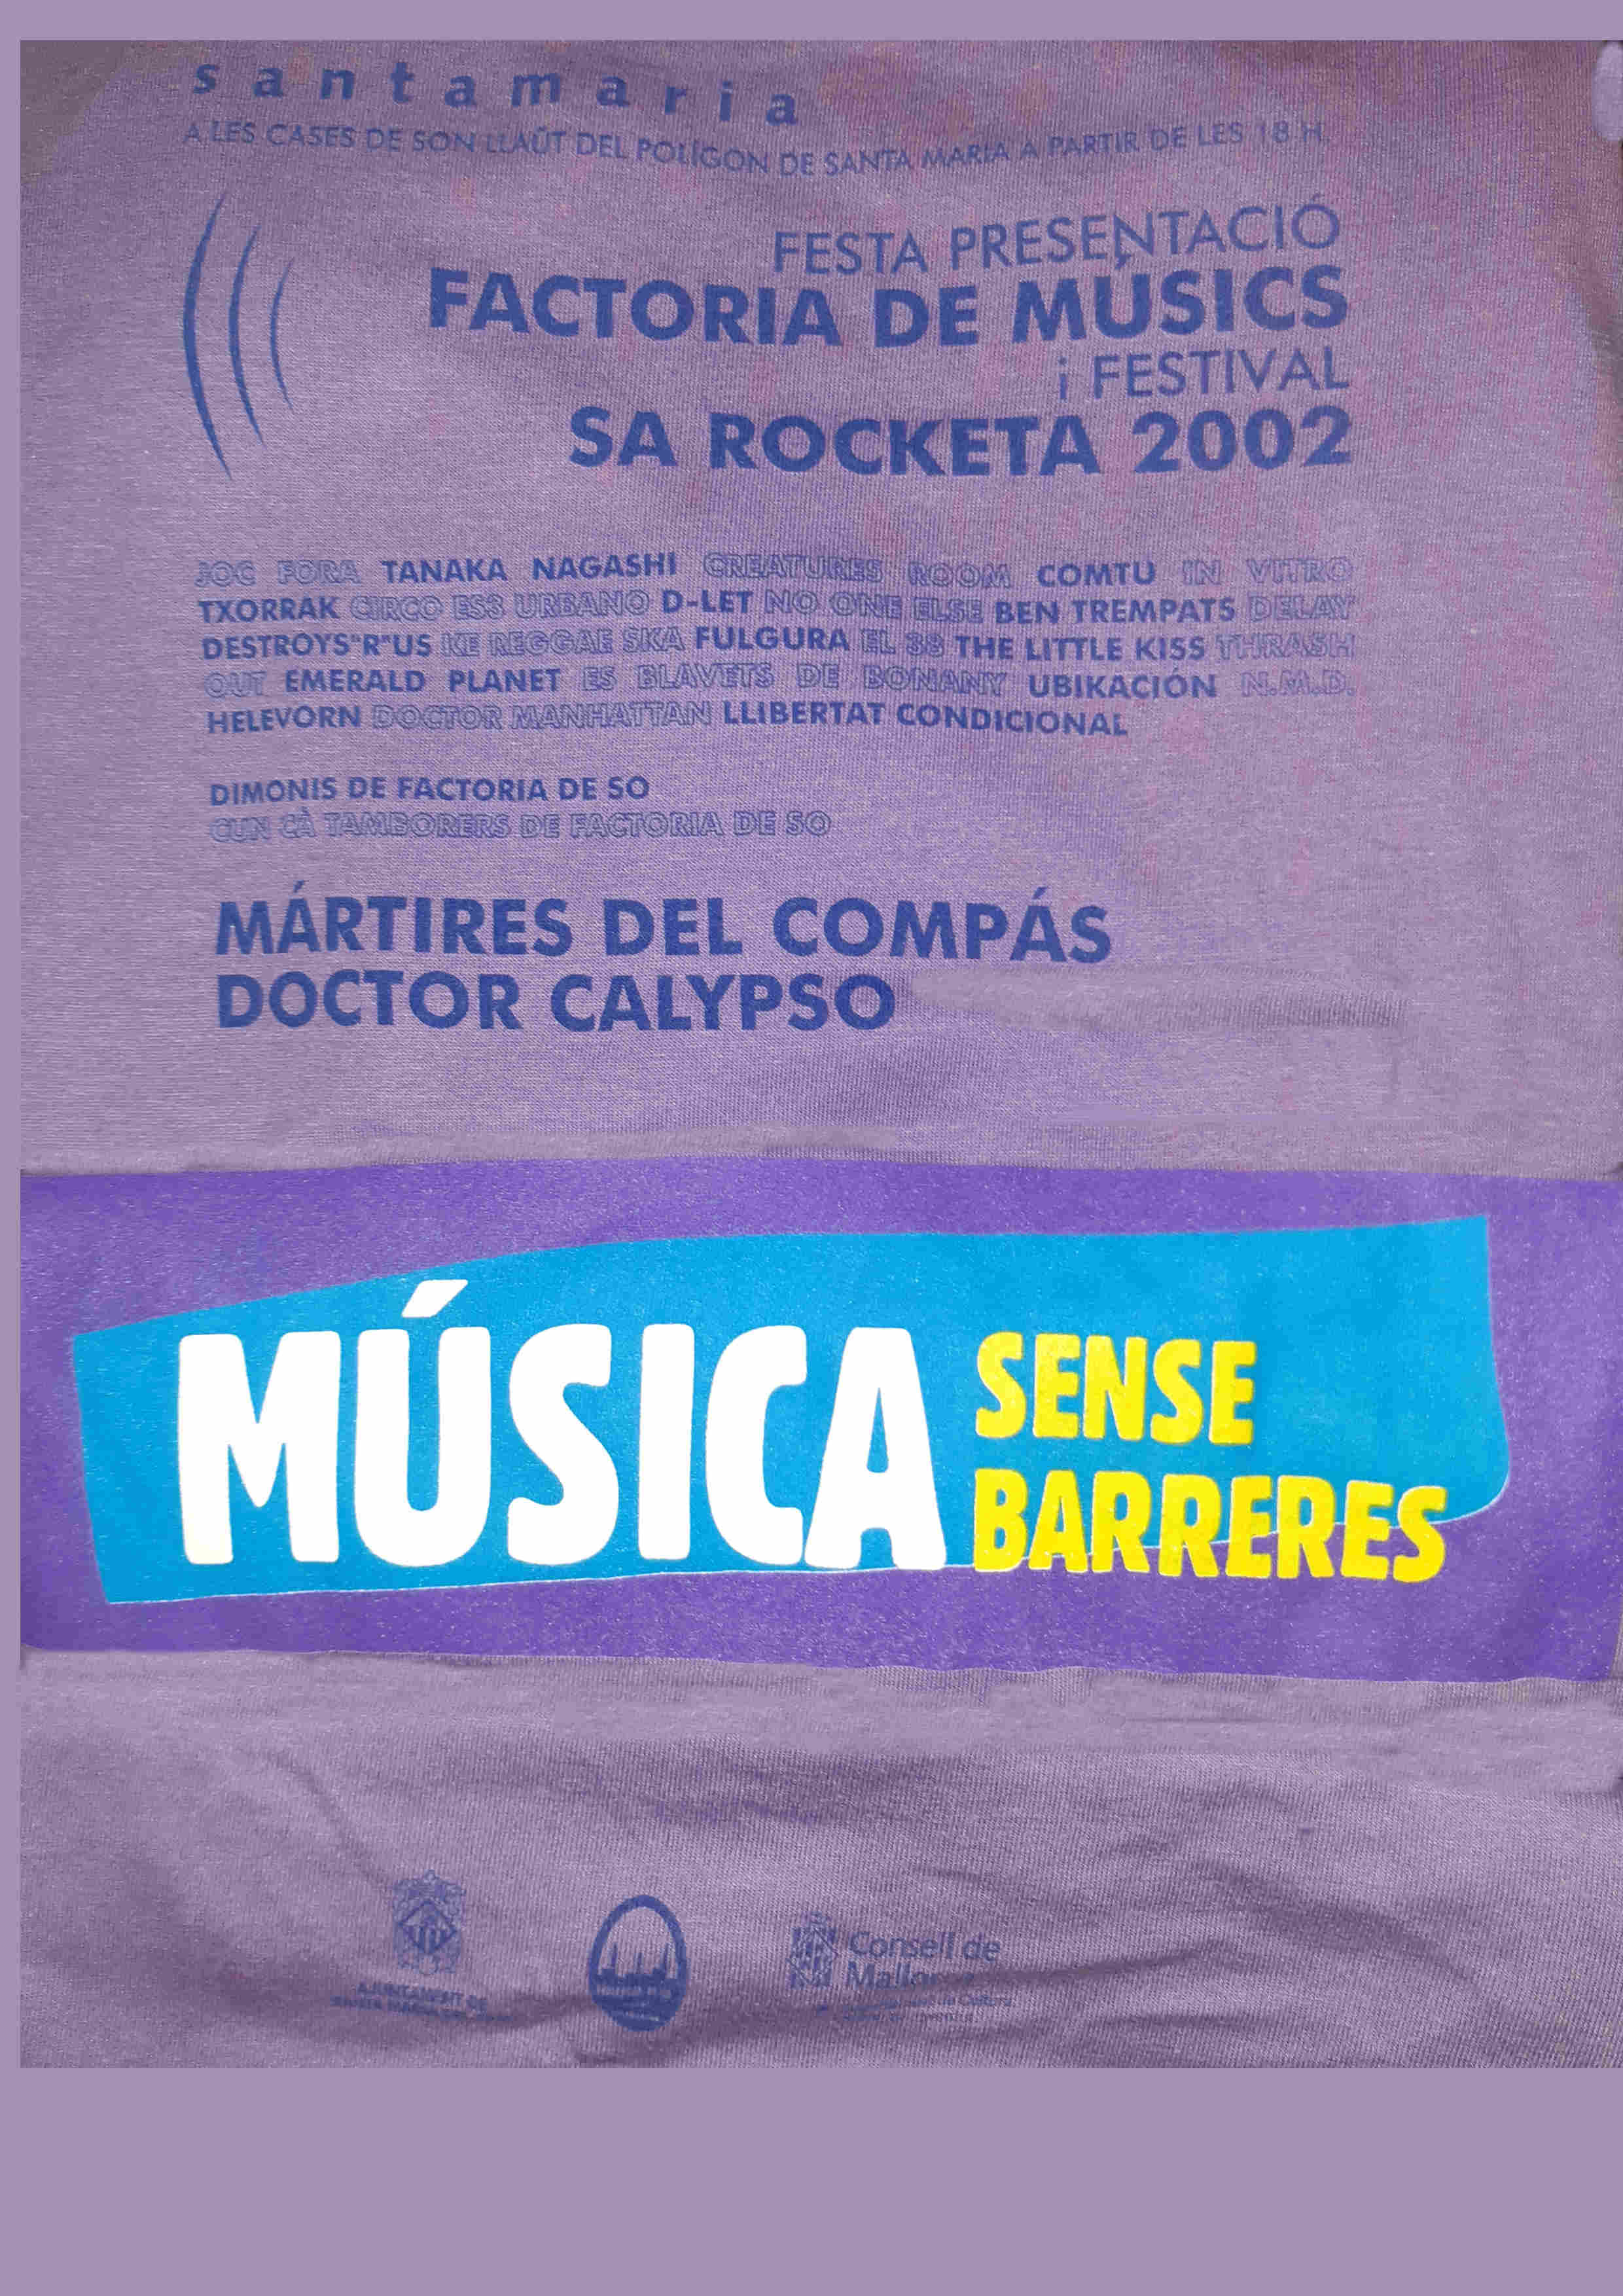 SaRocketaFestival2002